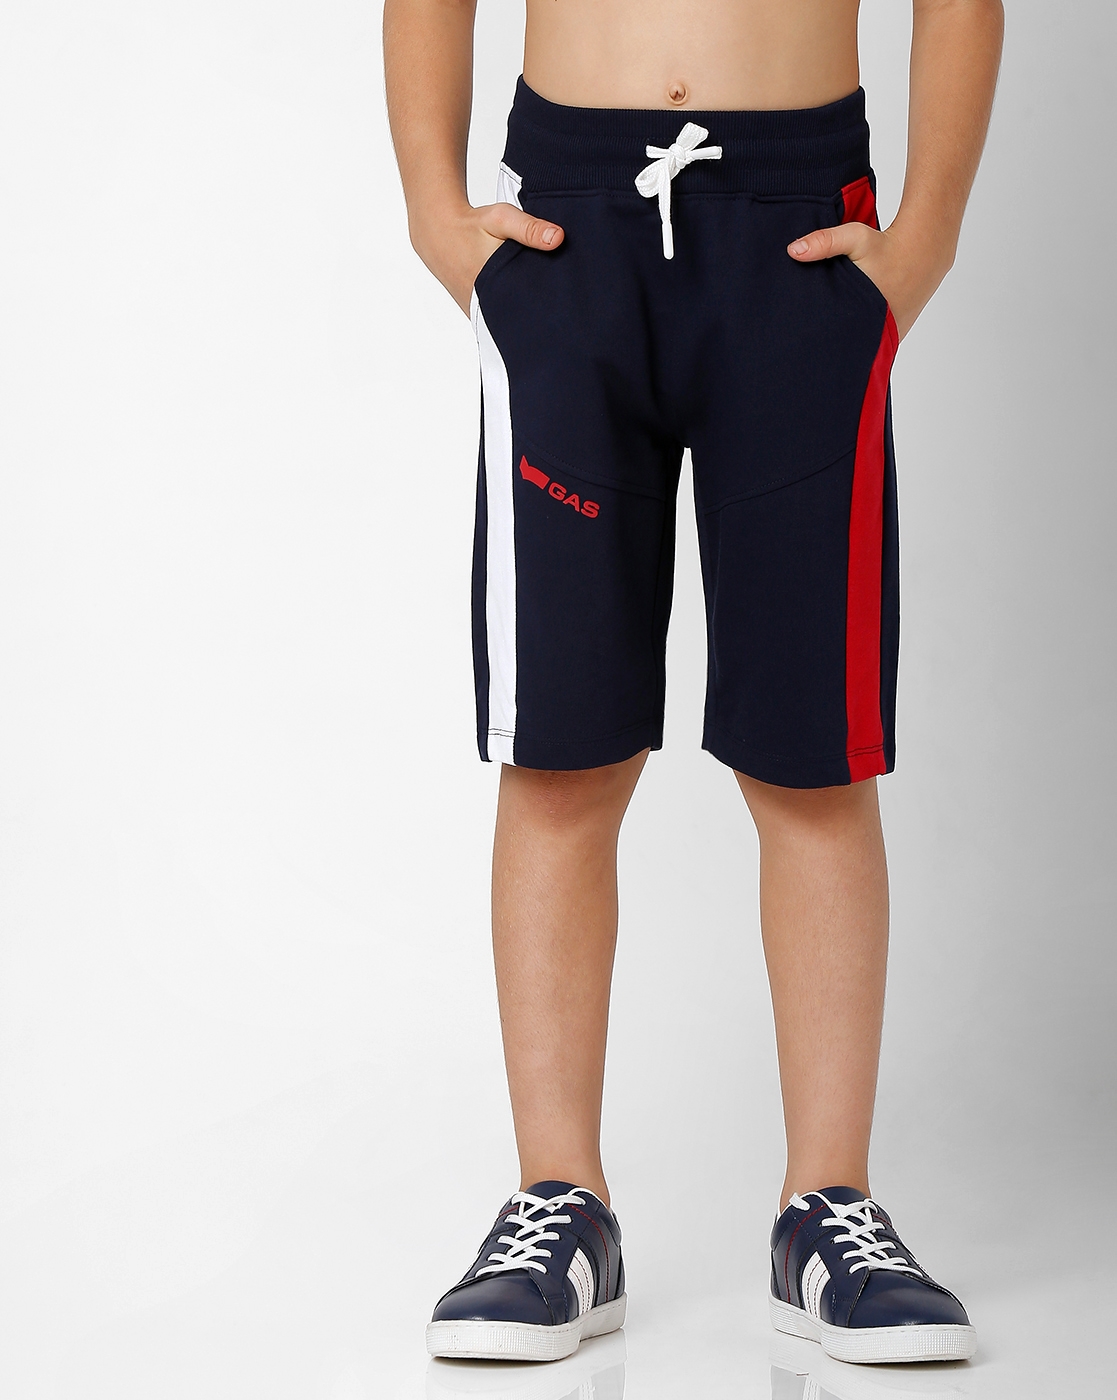 GAS | Boys Donald Jr Dual Stripe IN Shorts